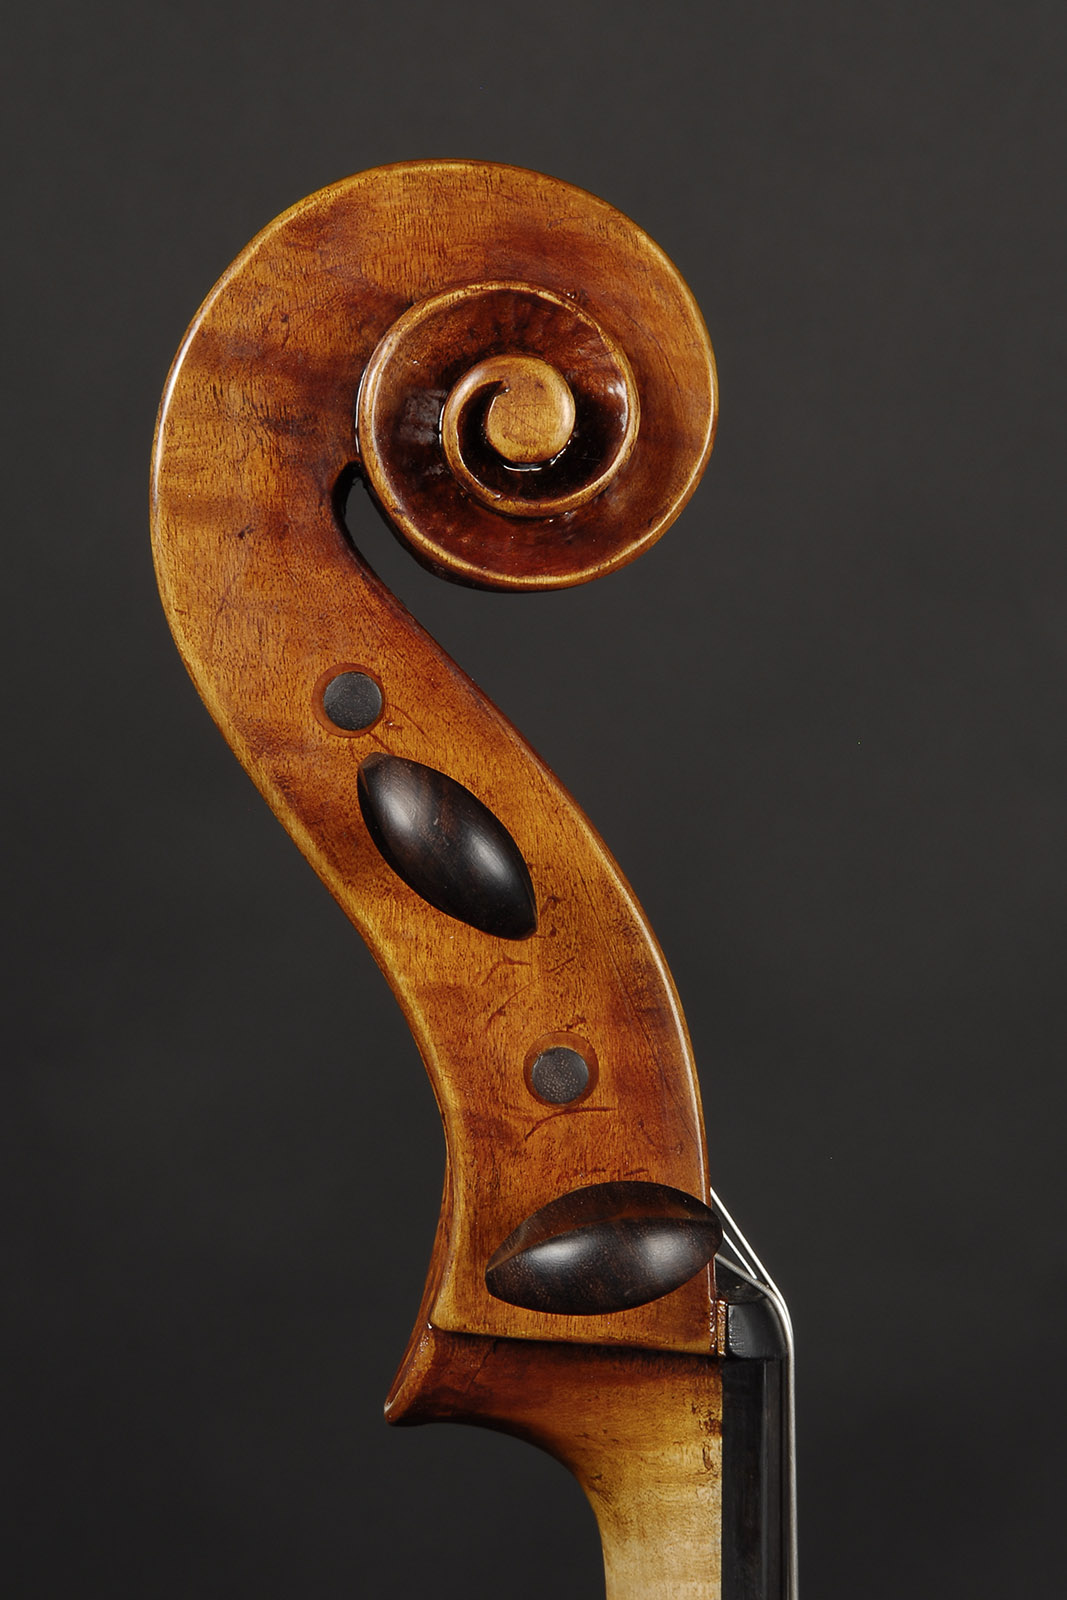 Antonio Stradivari Cremona 1730 “Feuermann“ “Maremmano“ - Image 6